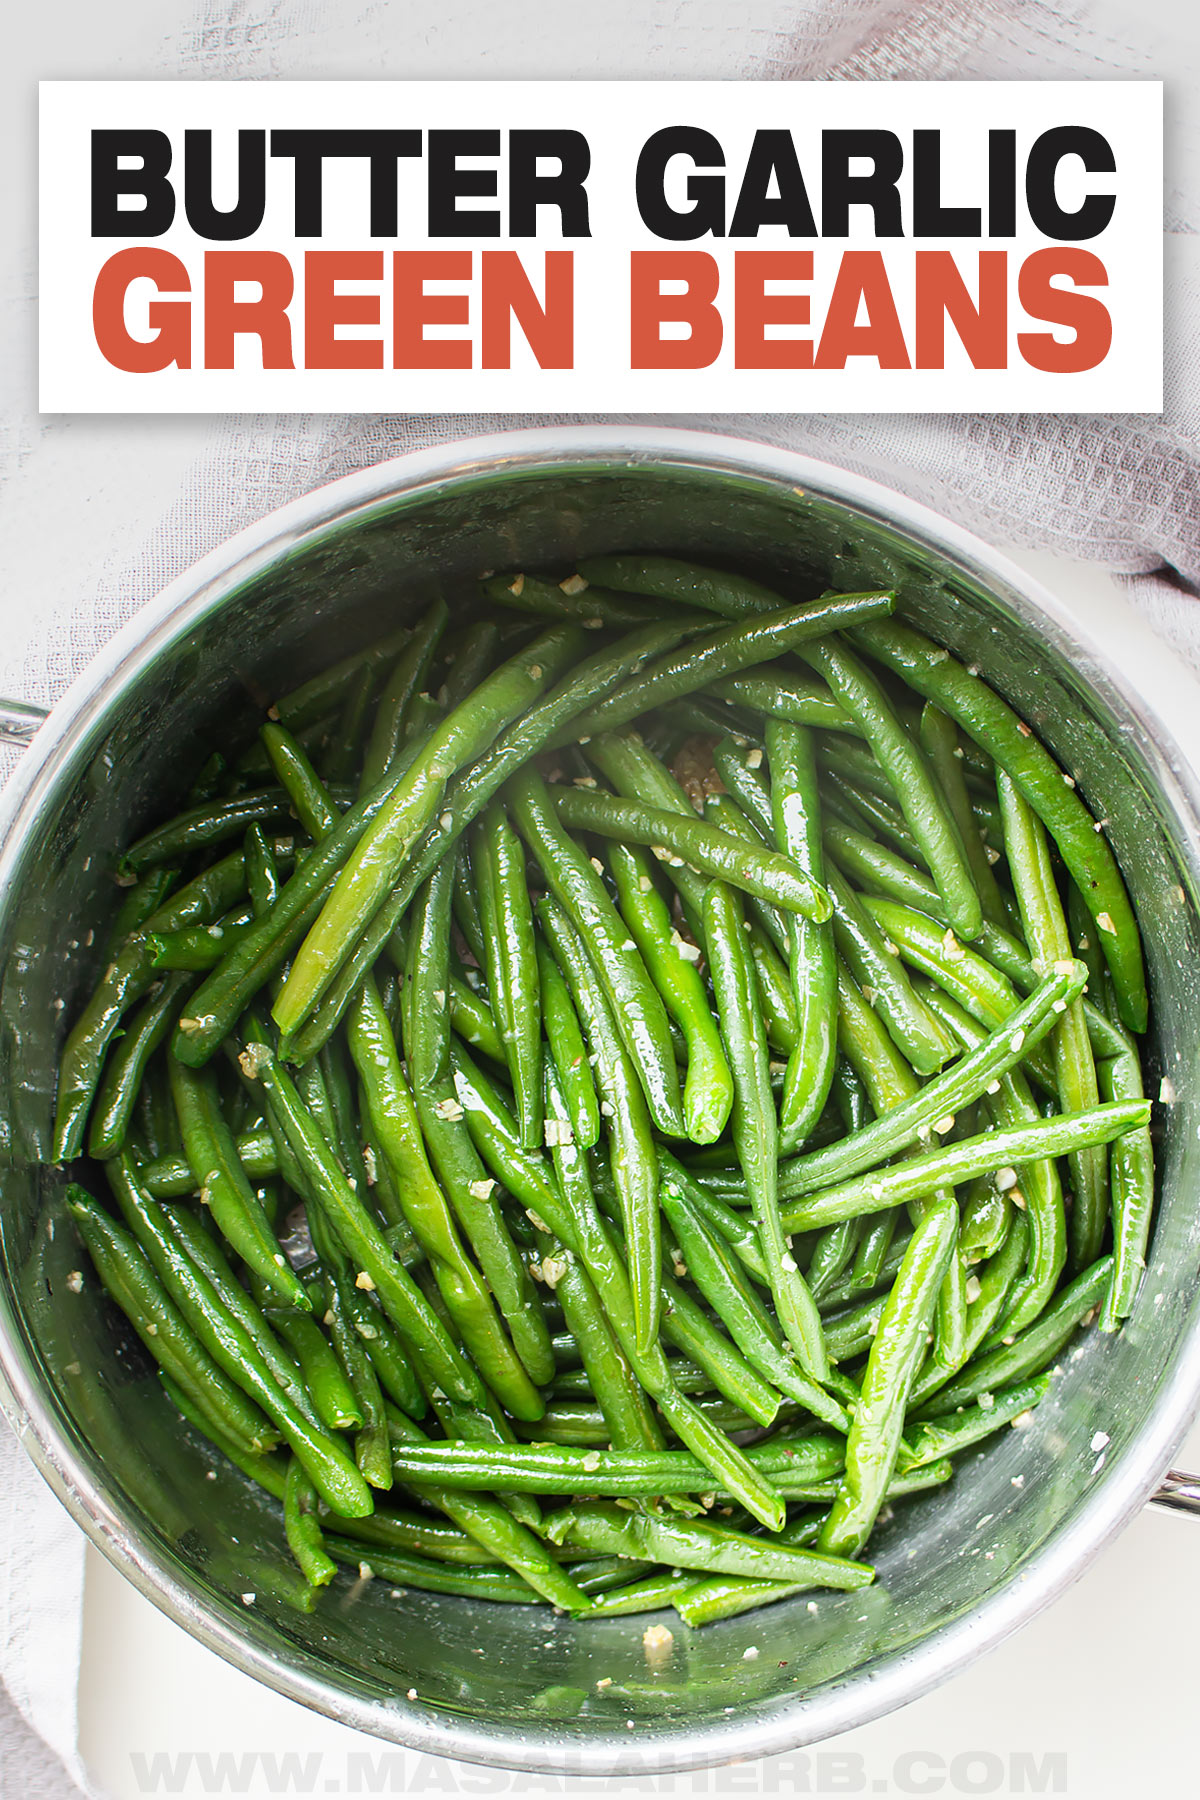 Butter Garlic Green Beans Recipe cover image